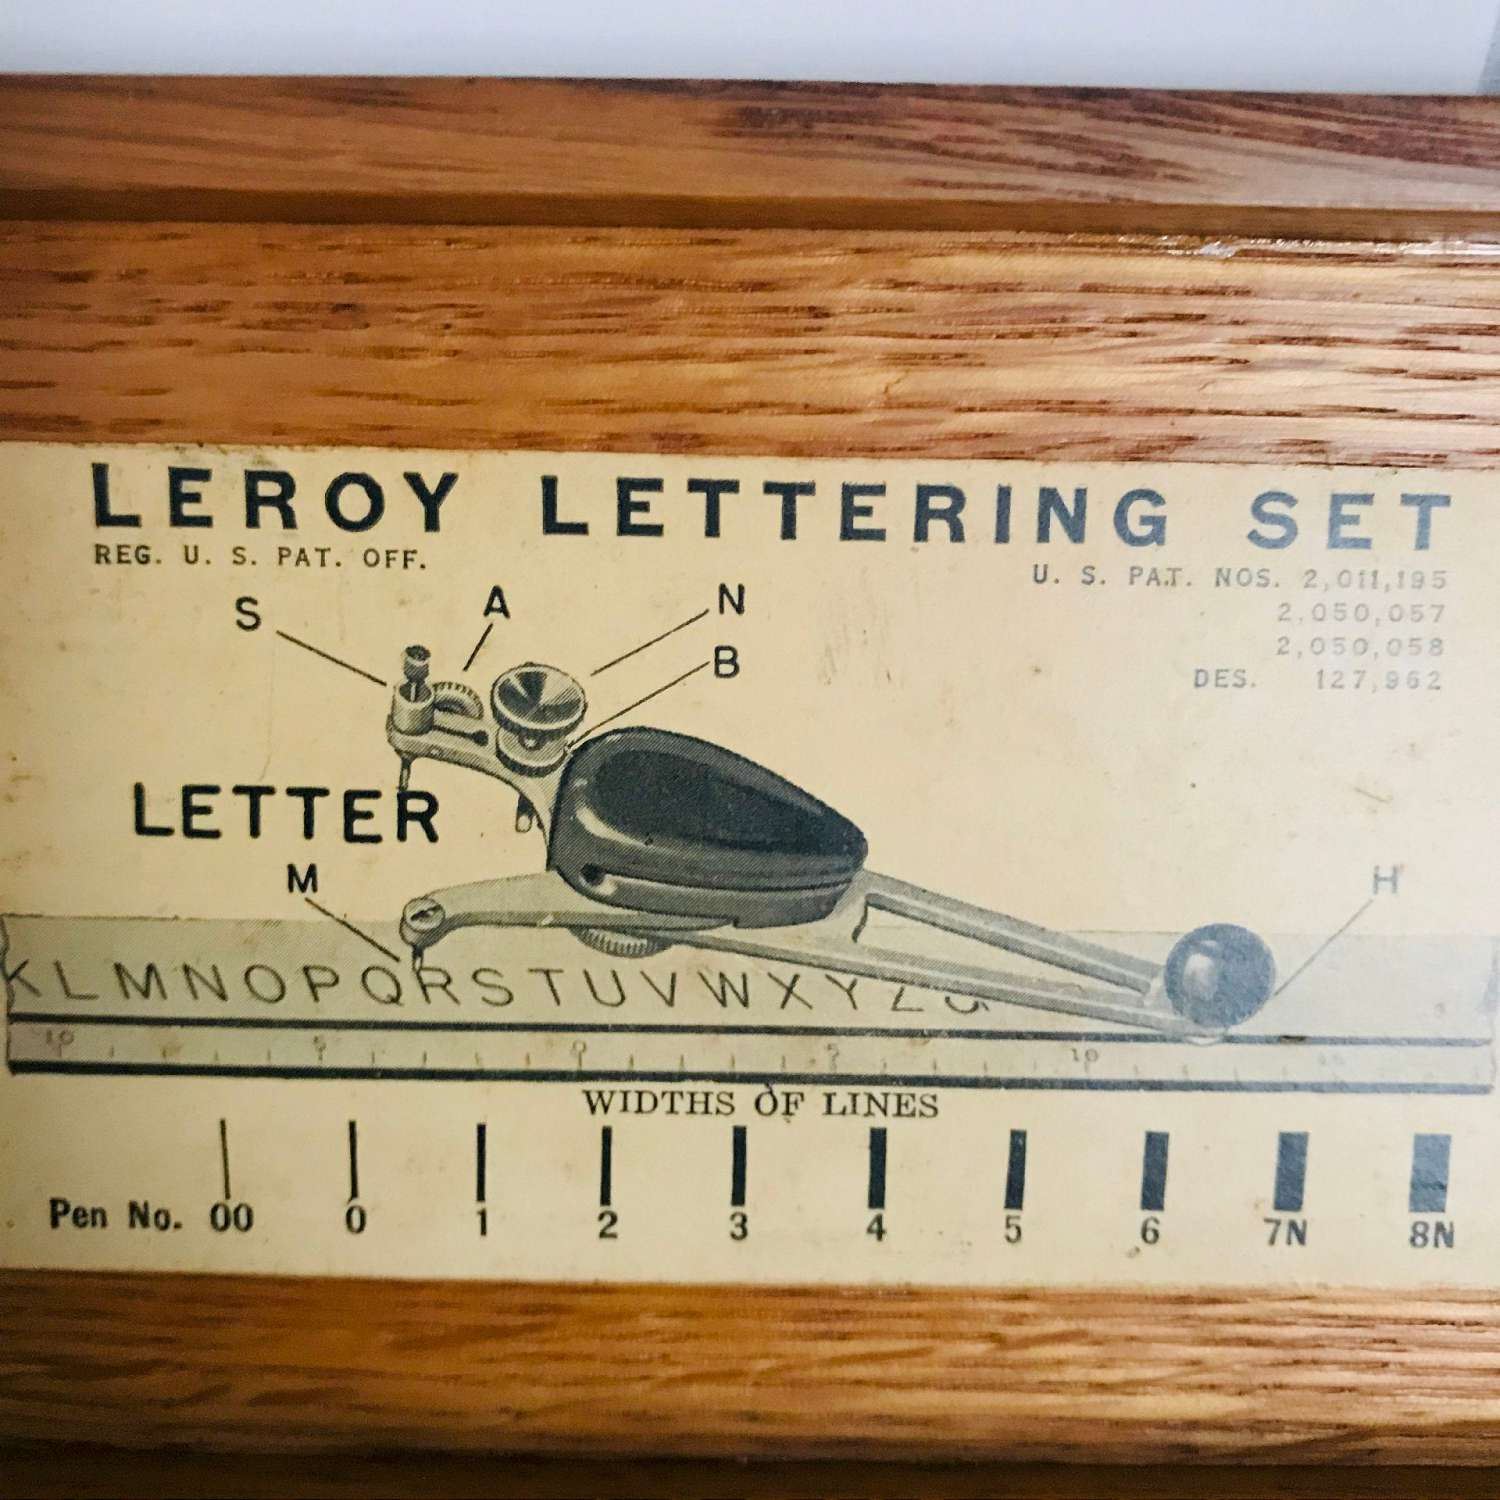 Sold at Auction: 1950 Keuffel & Esser Co. Leroy Lettering Set